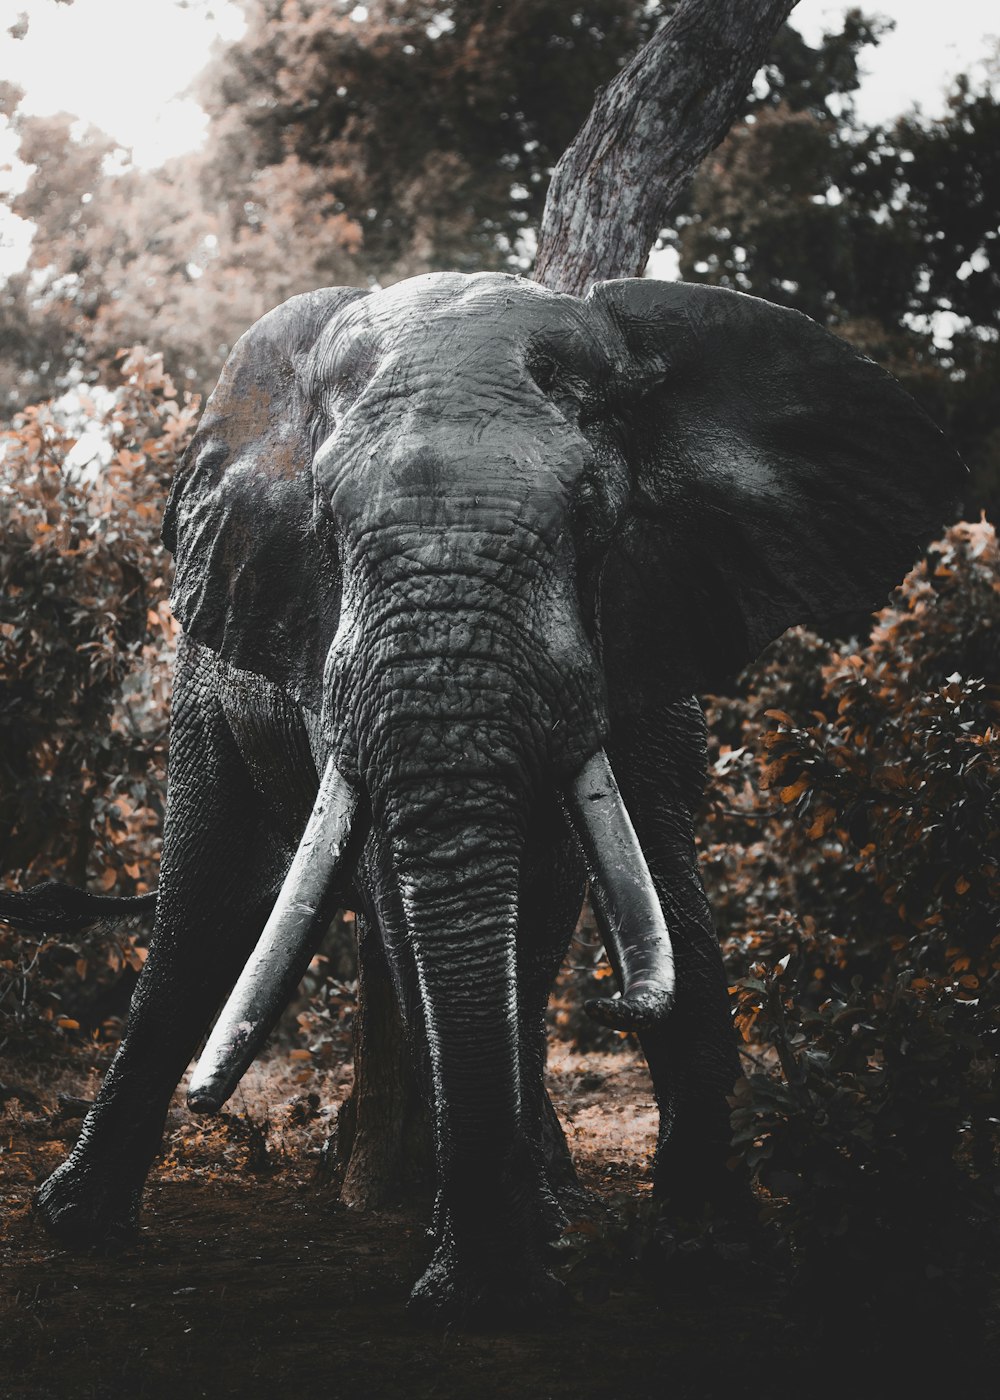 grey elephant walking on brown ground during daytime